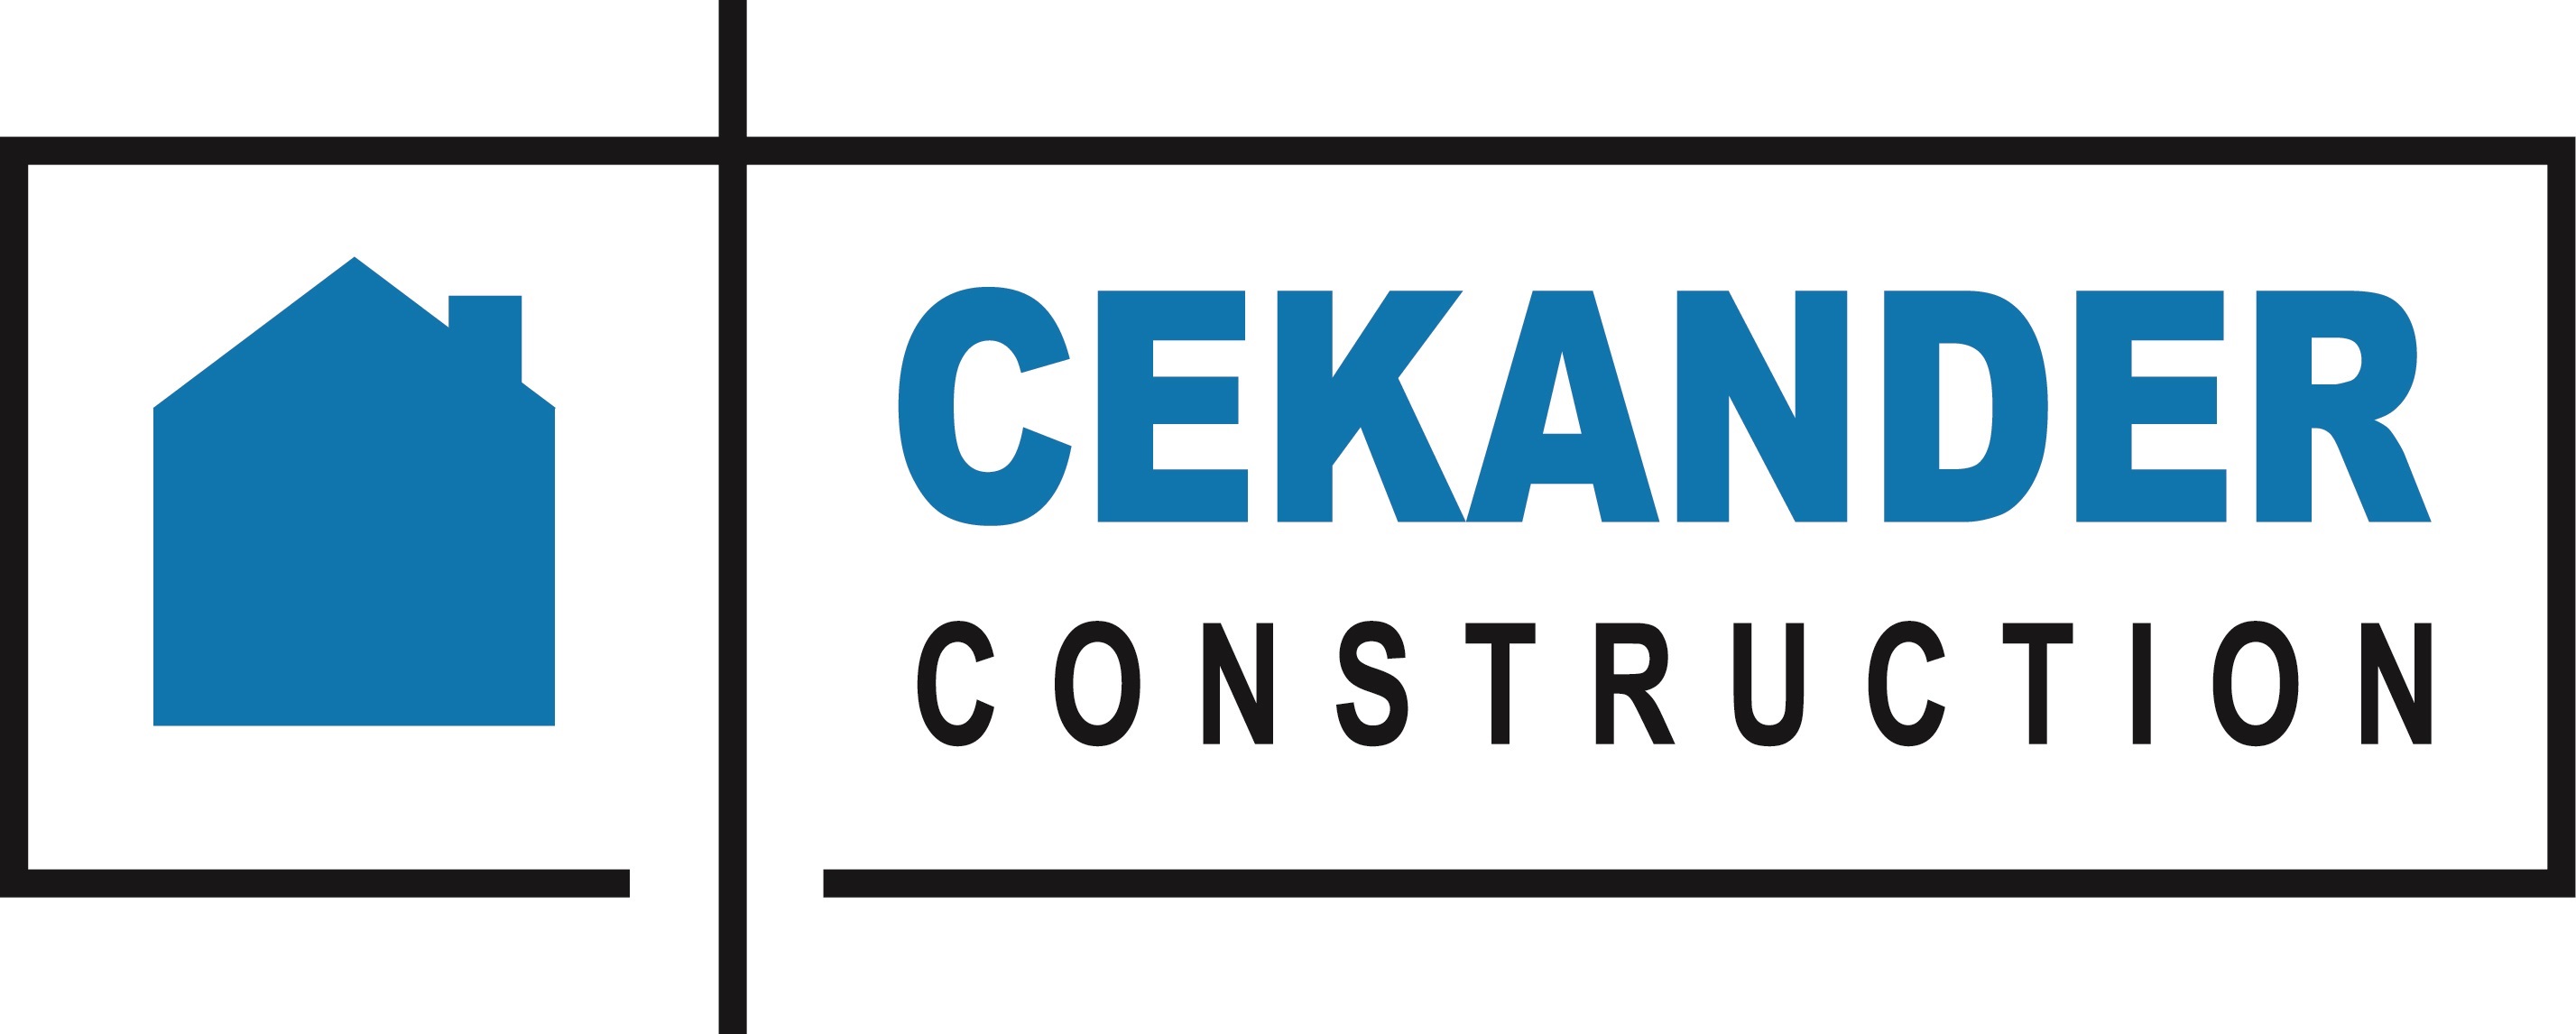 Cekander Construction